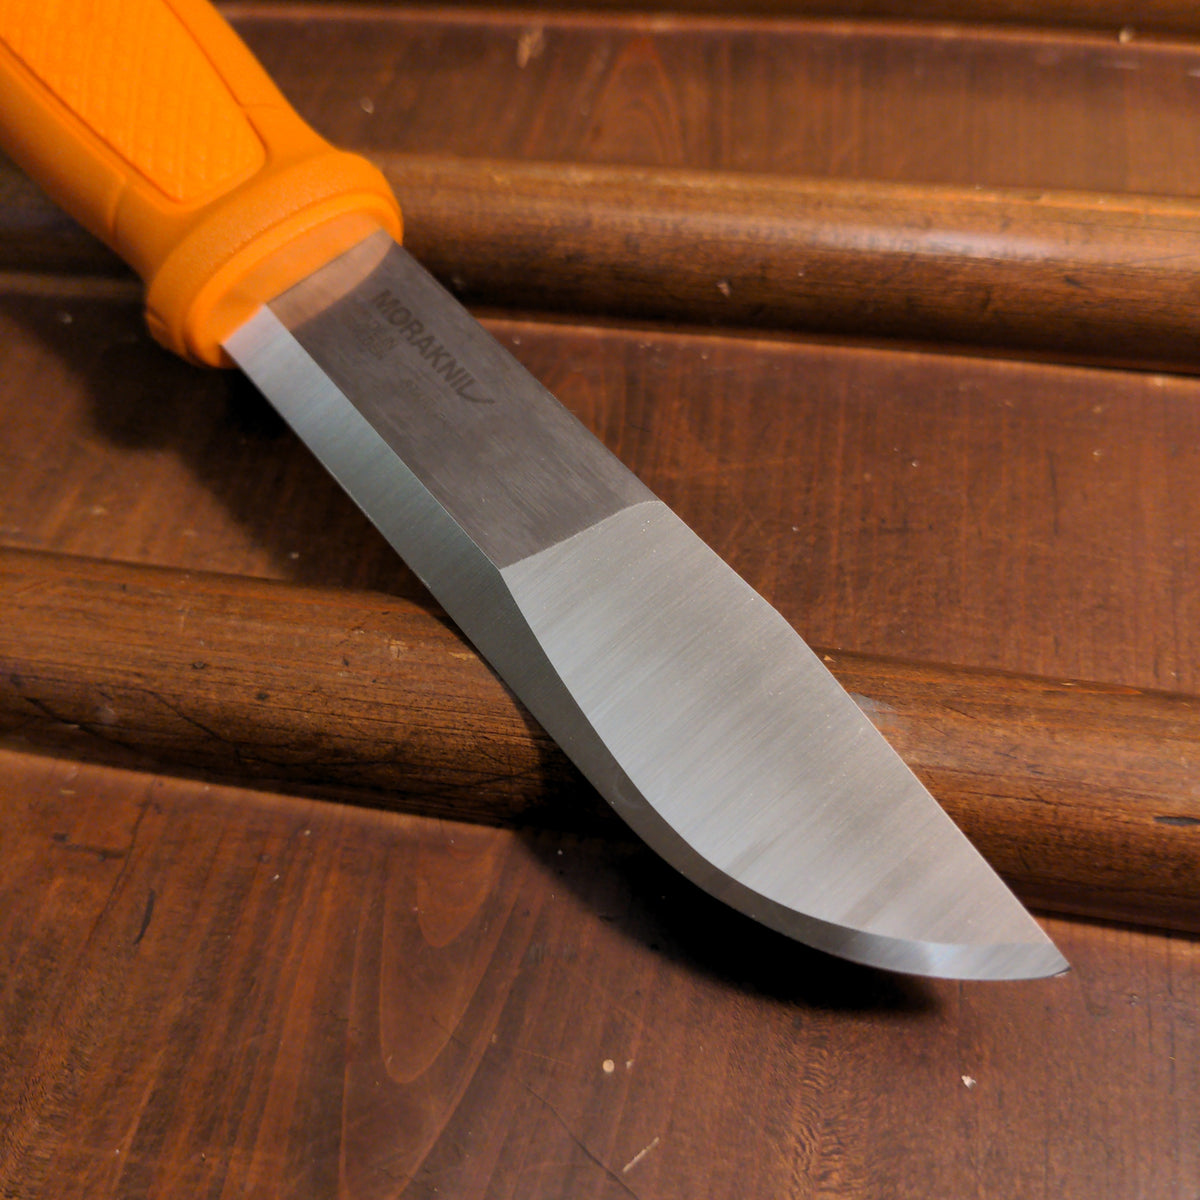 Morakniv Kansbol - Camping Fixed Blade Knife